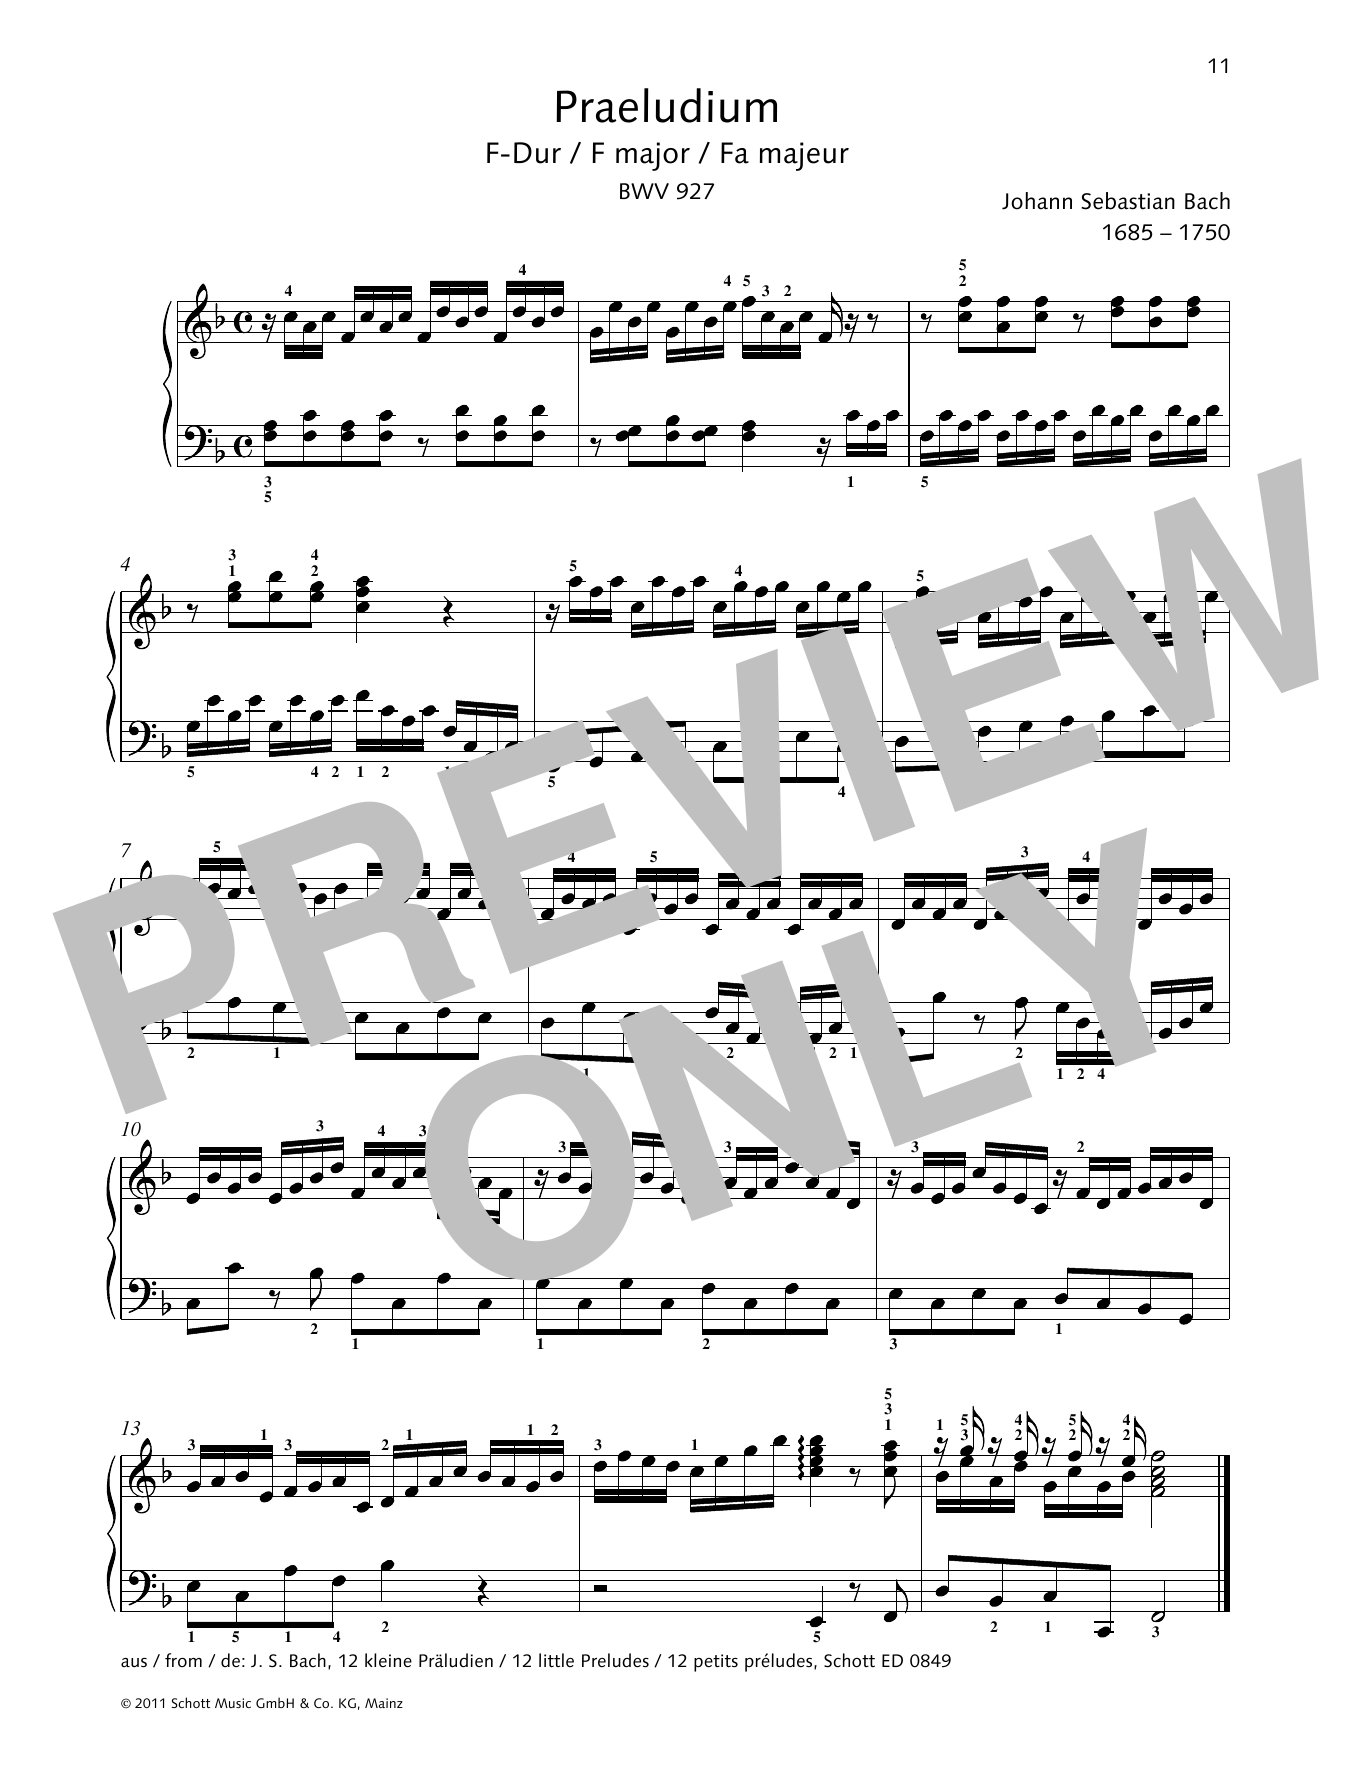 Johann Sebastian Bach Prelude F major Sheet Music Notes & Chords for Piano Solo - Download or Print PDF